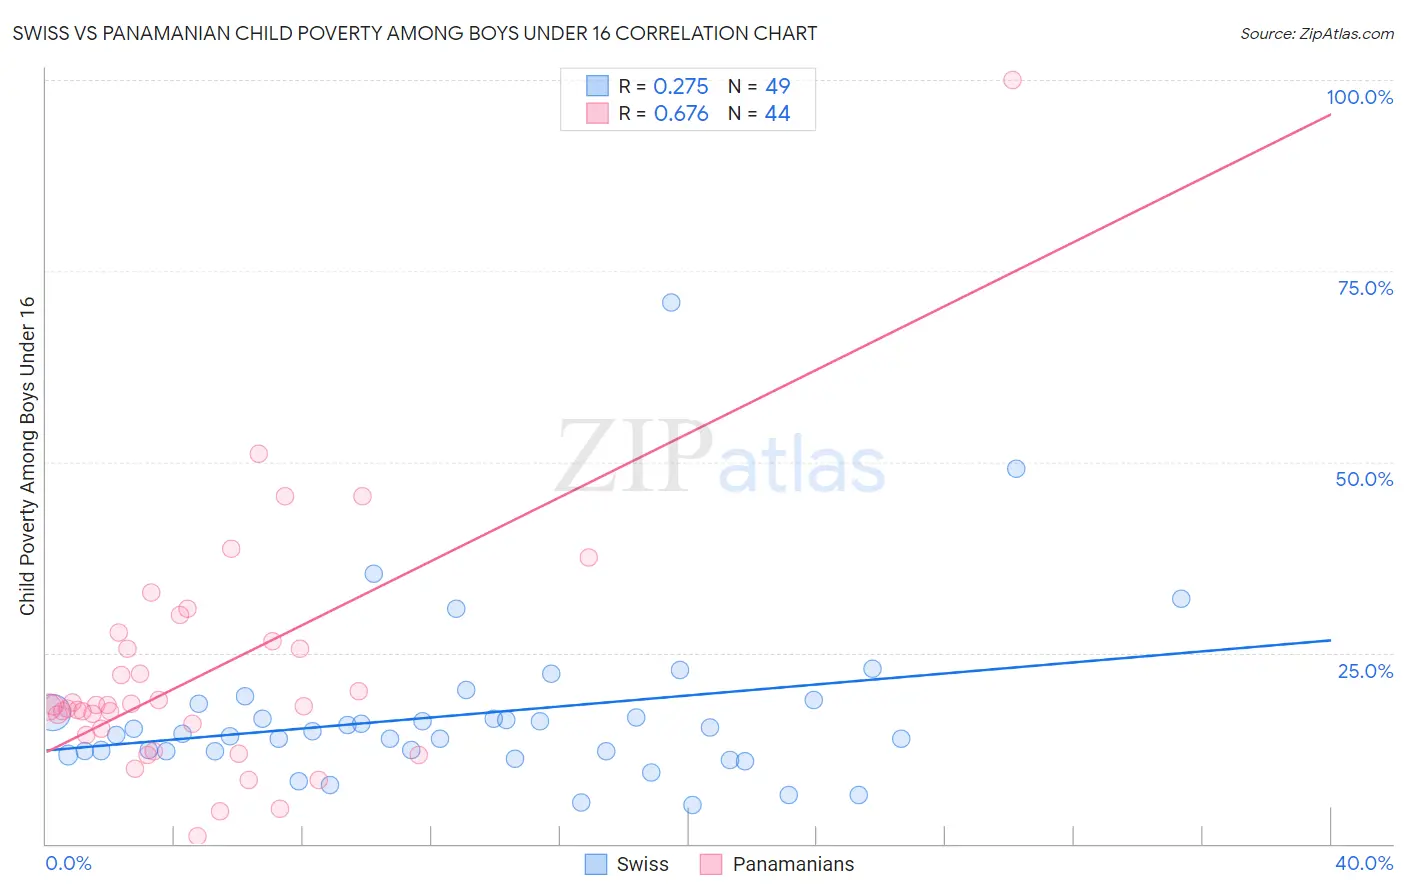 Swiss vs Panamanian Child Poverty Among Boys Under 16